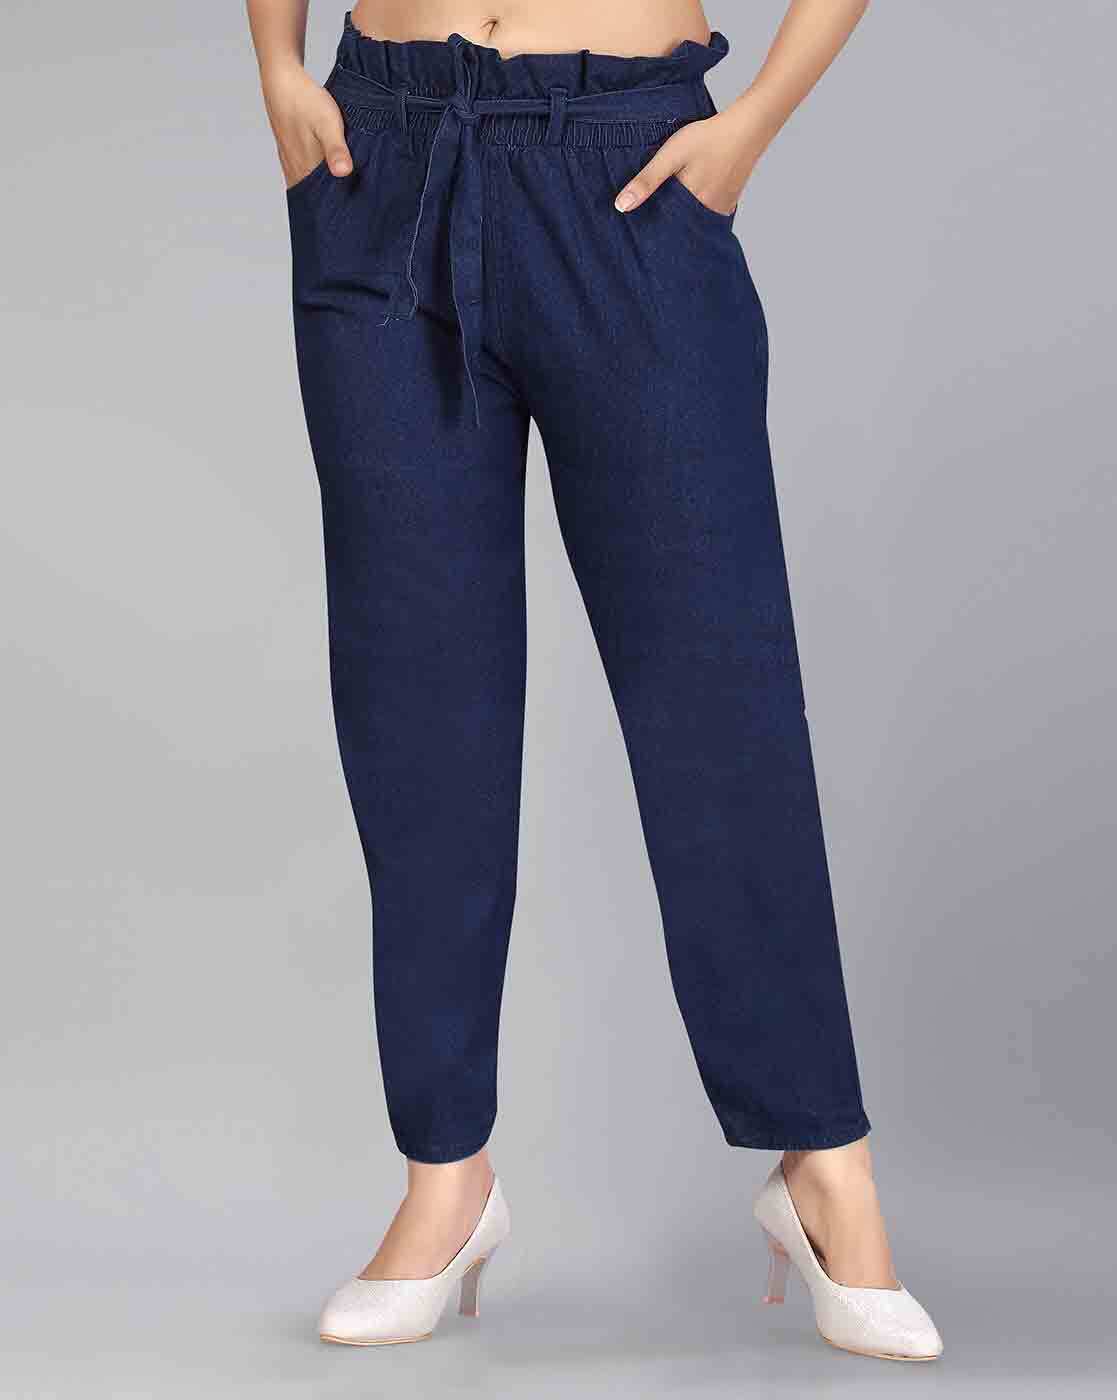 Buy Blue Jeans & Jeggings for Girls by AARIKA GIRLS ETHNIC Online